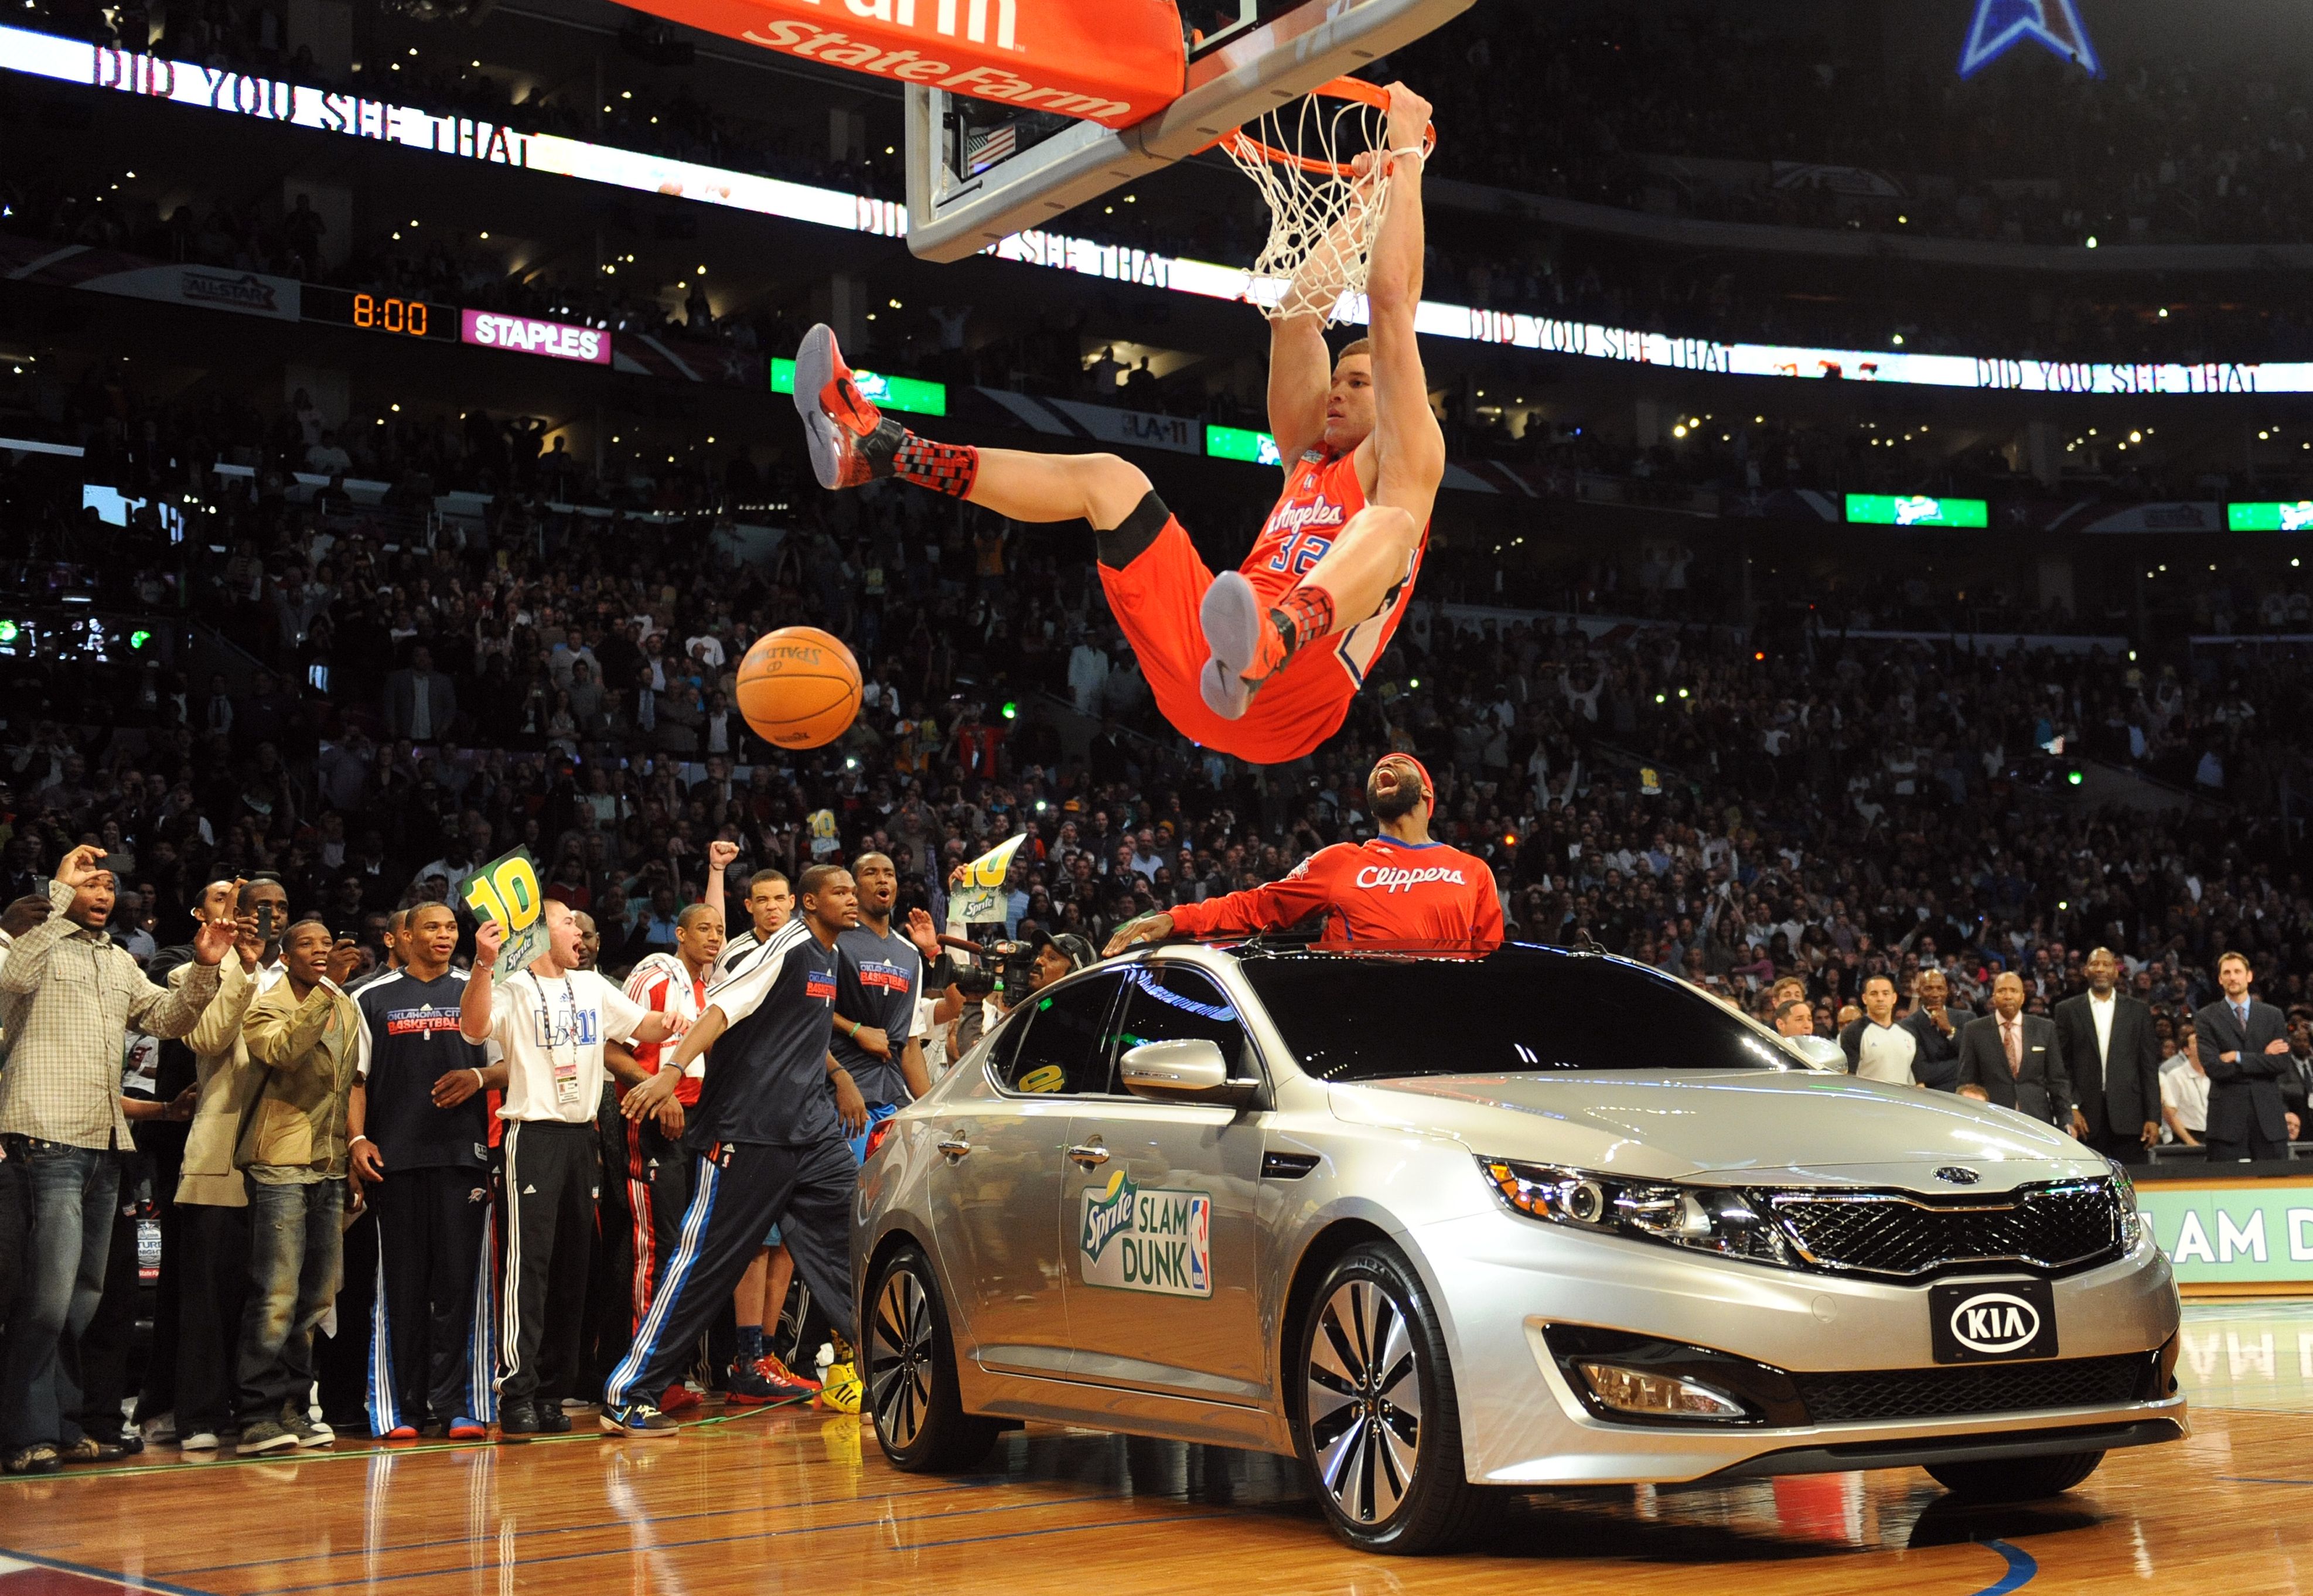 Blake Griffin dunking